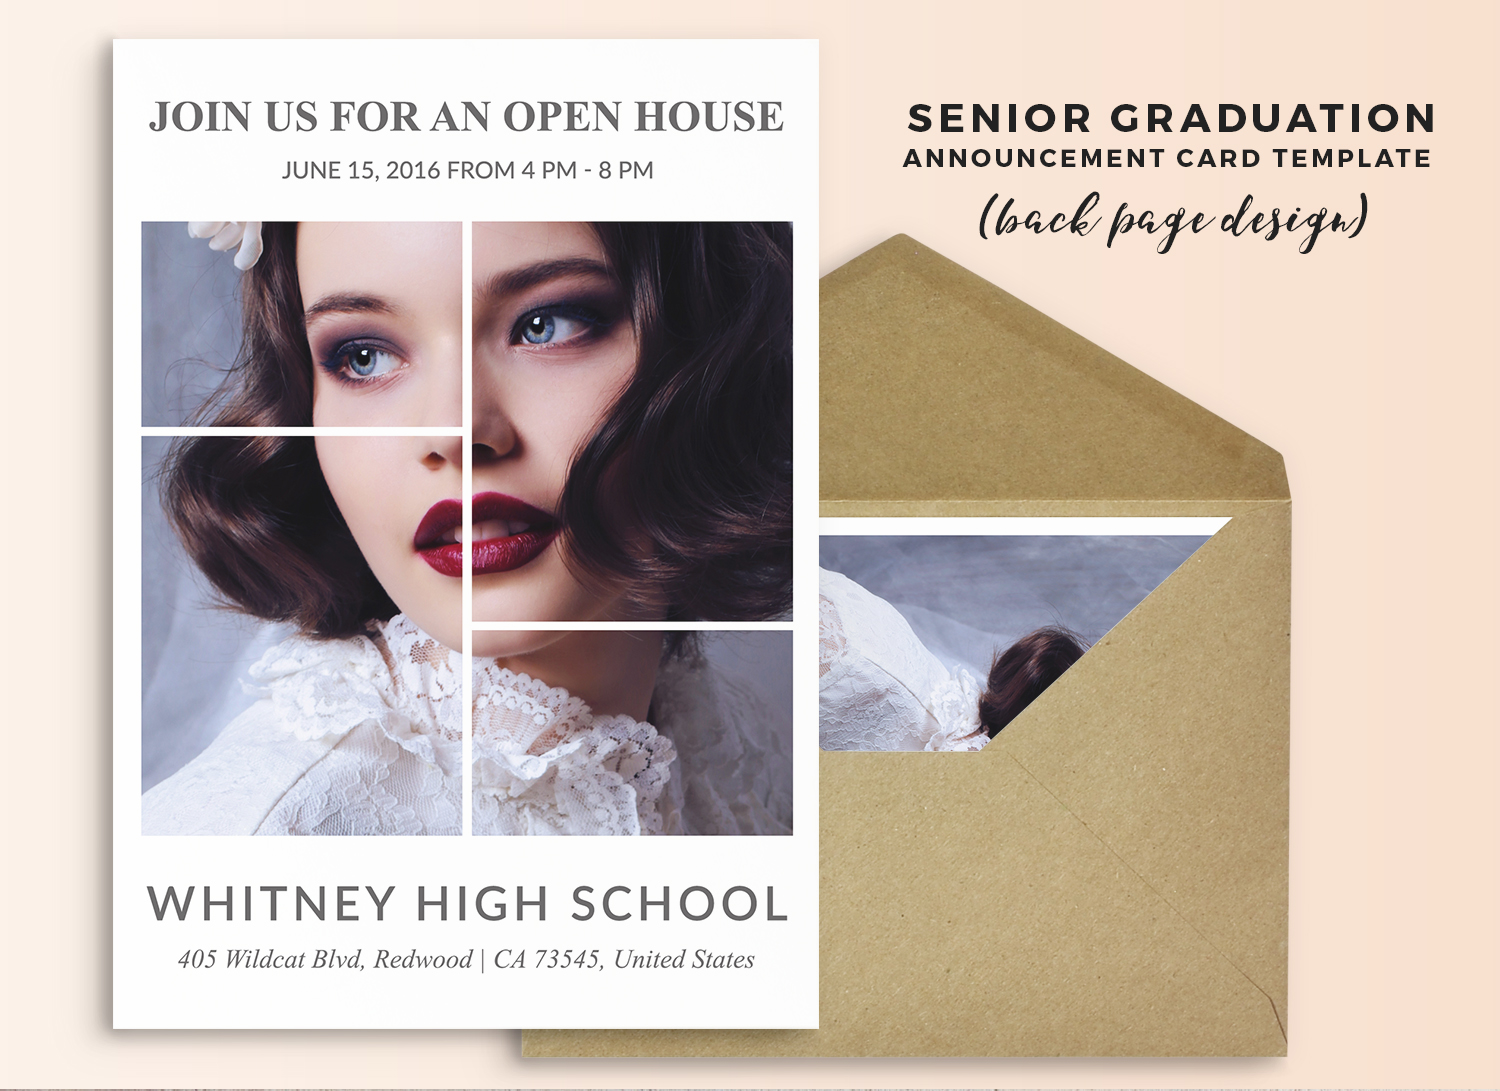 Senior graduation announcement card marketing template